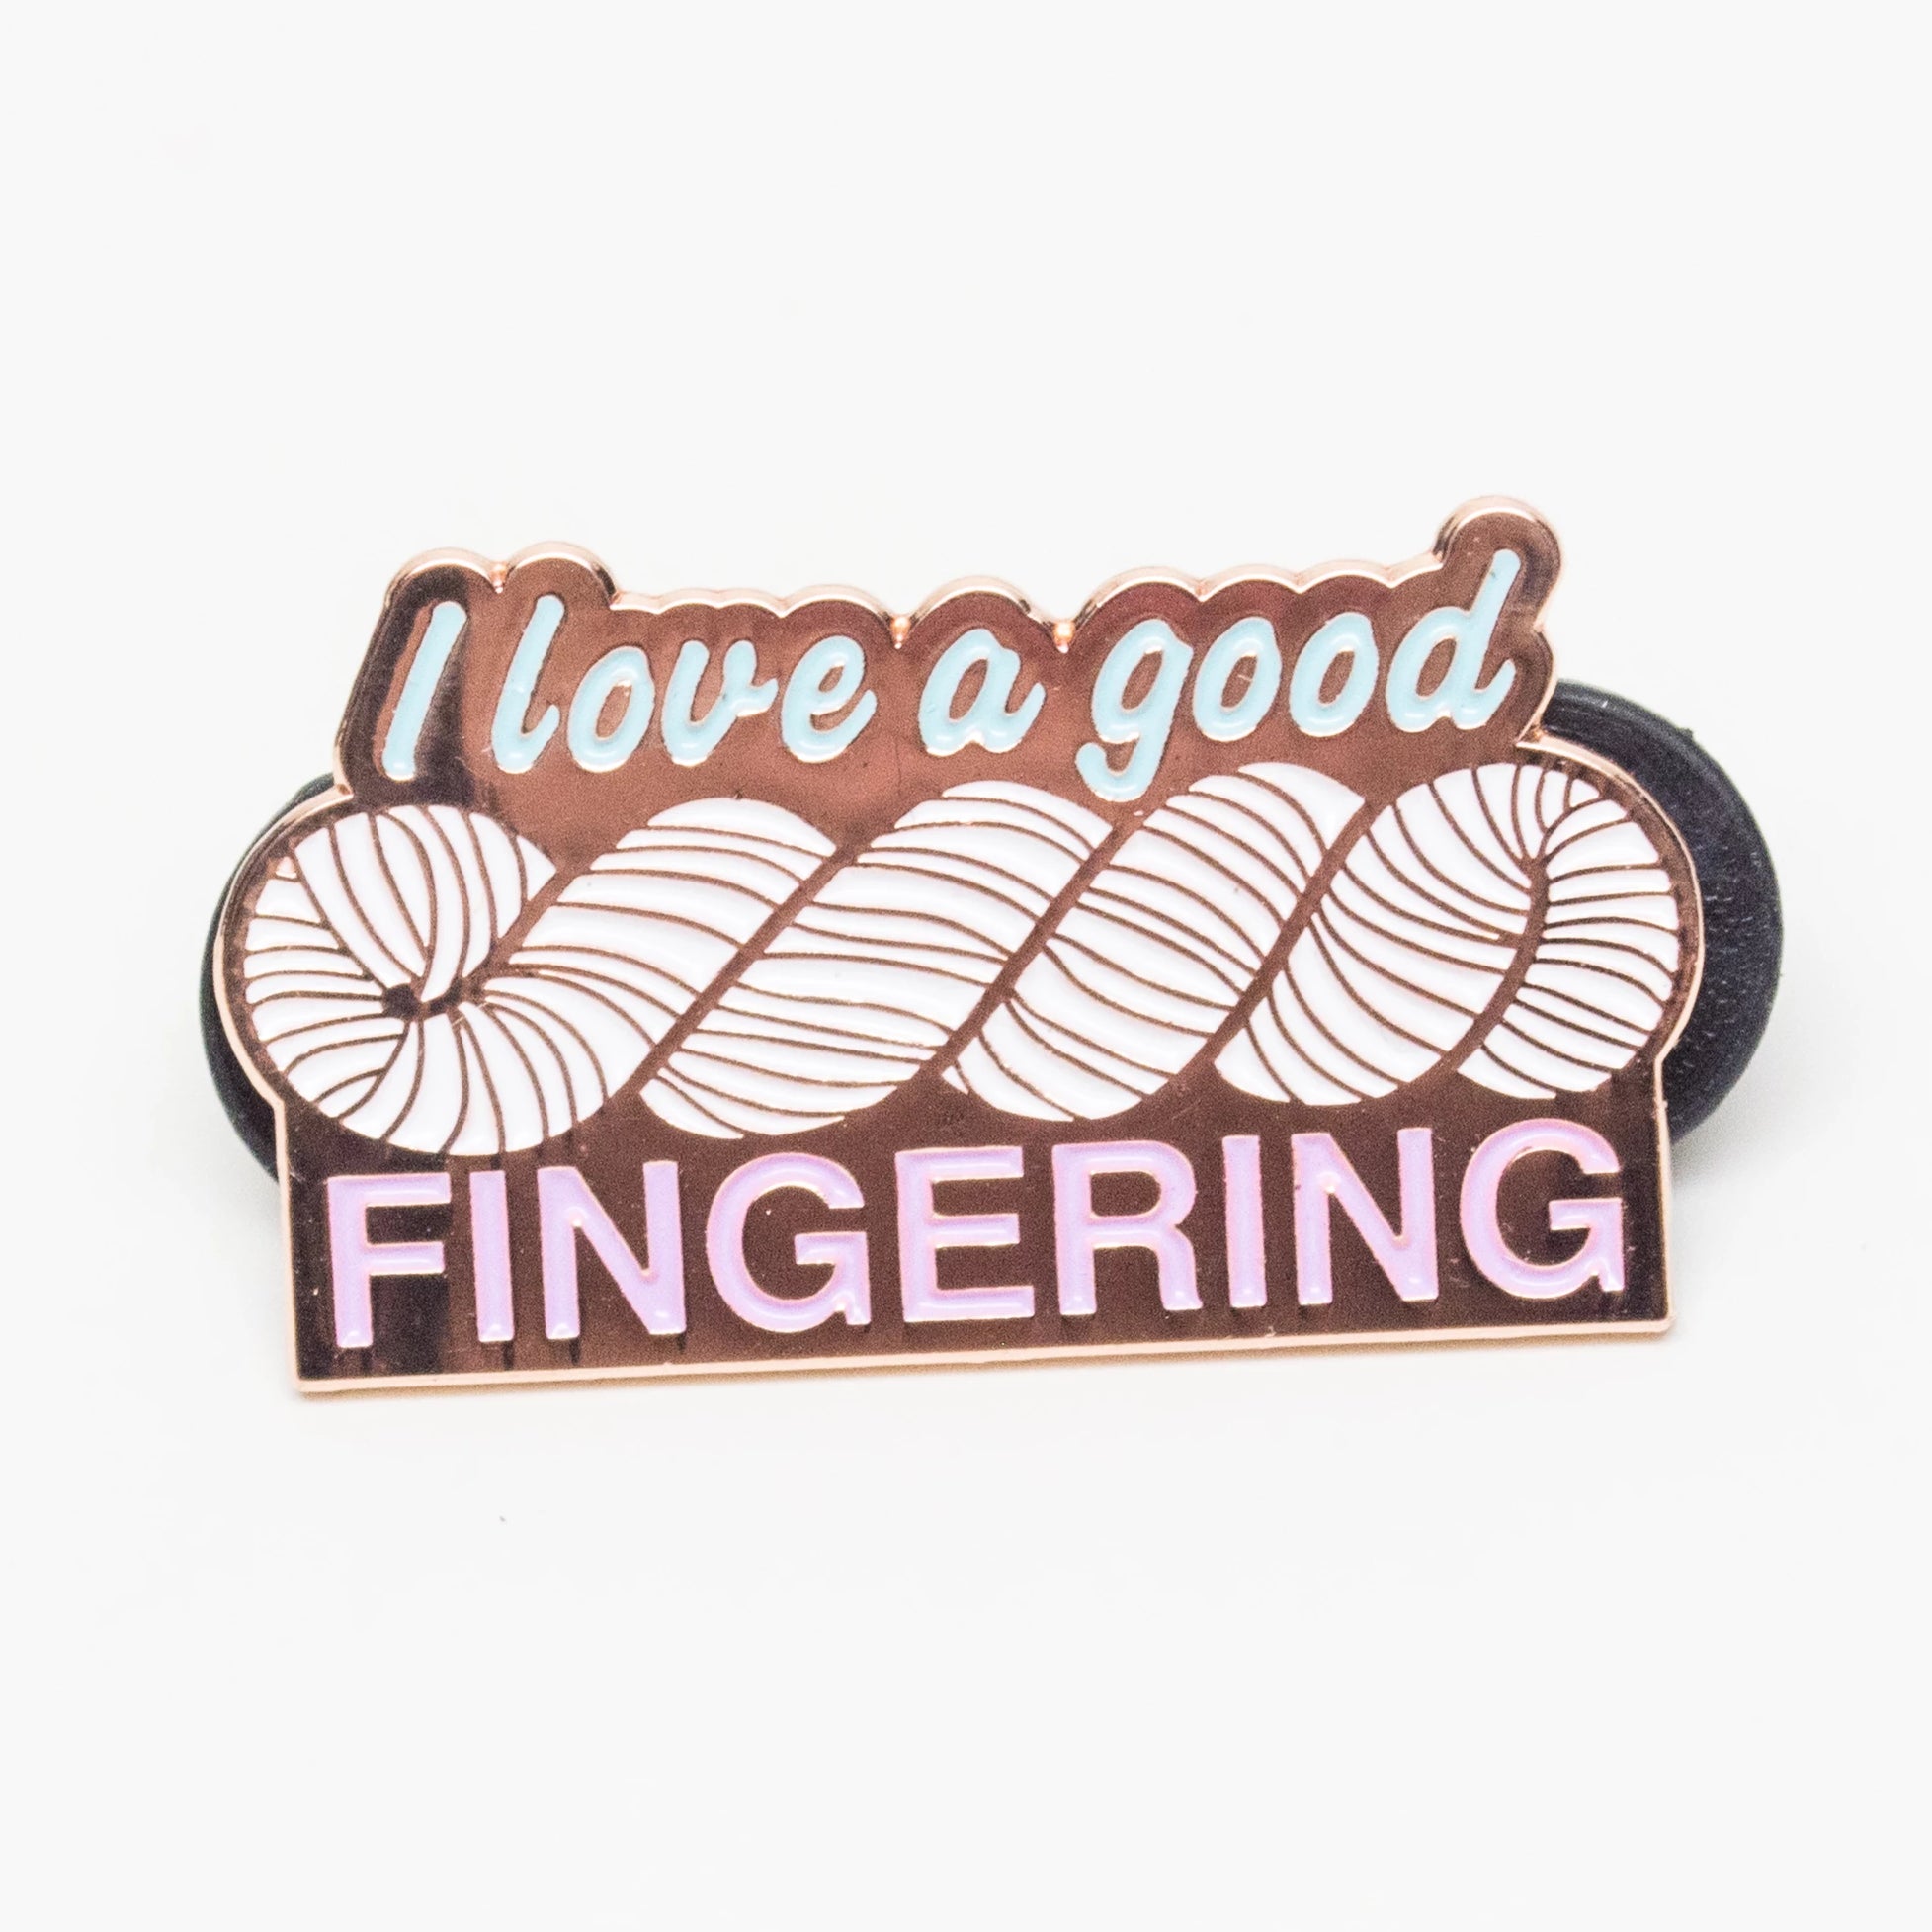 A good fingering